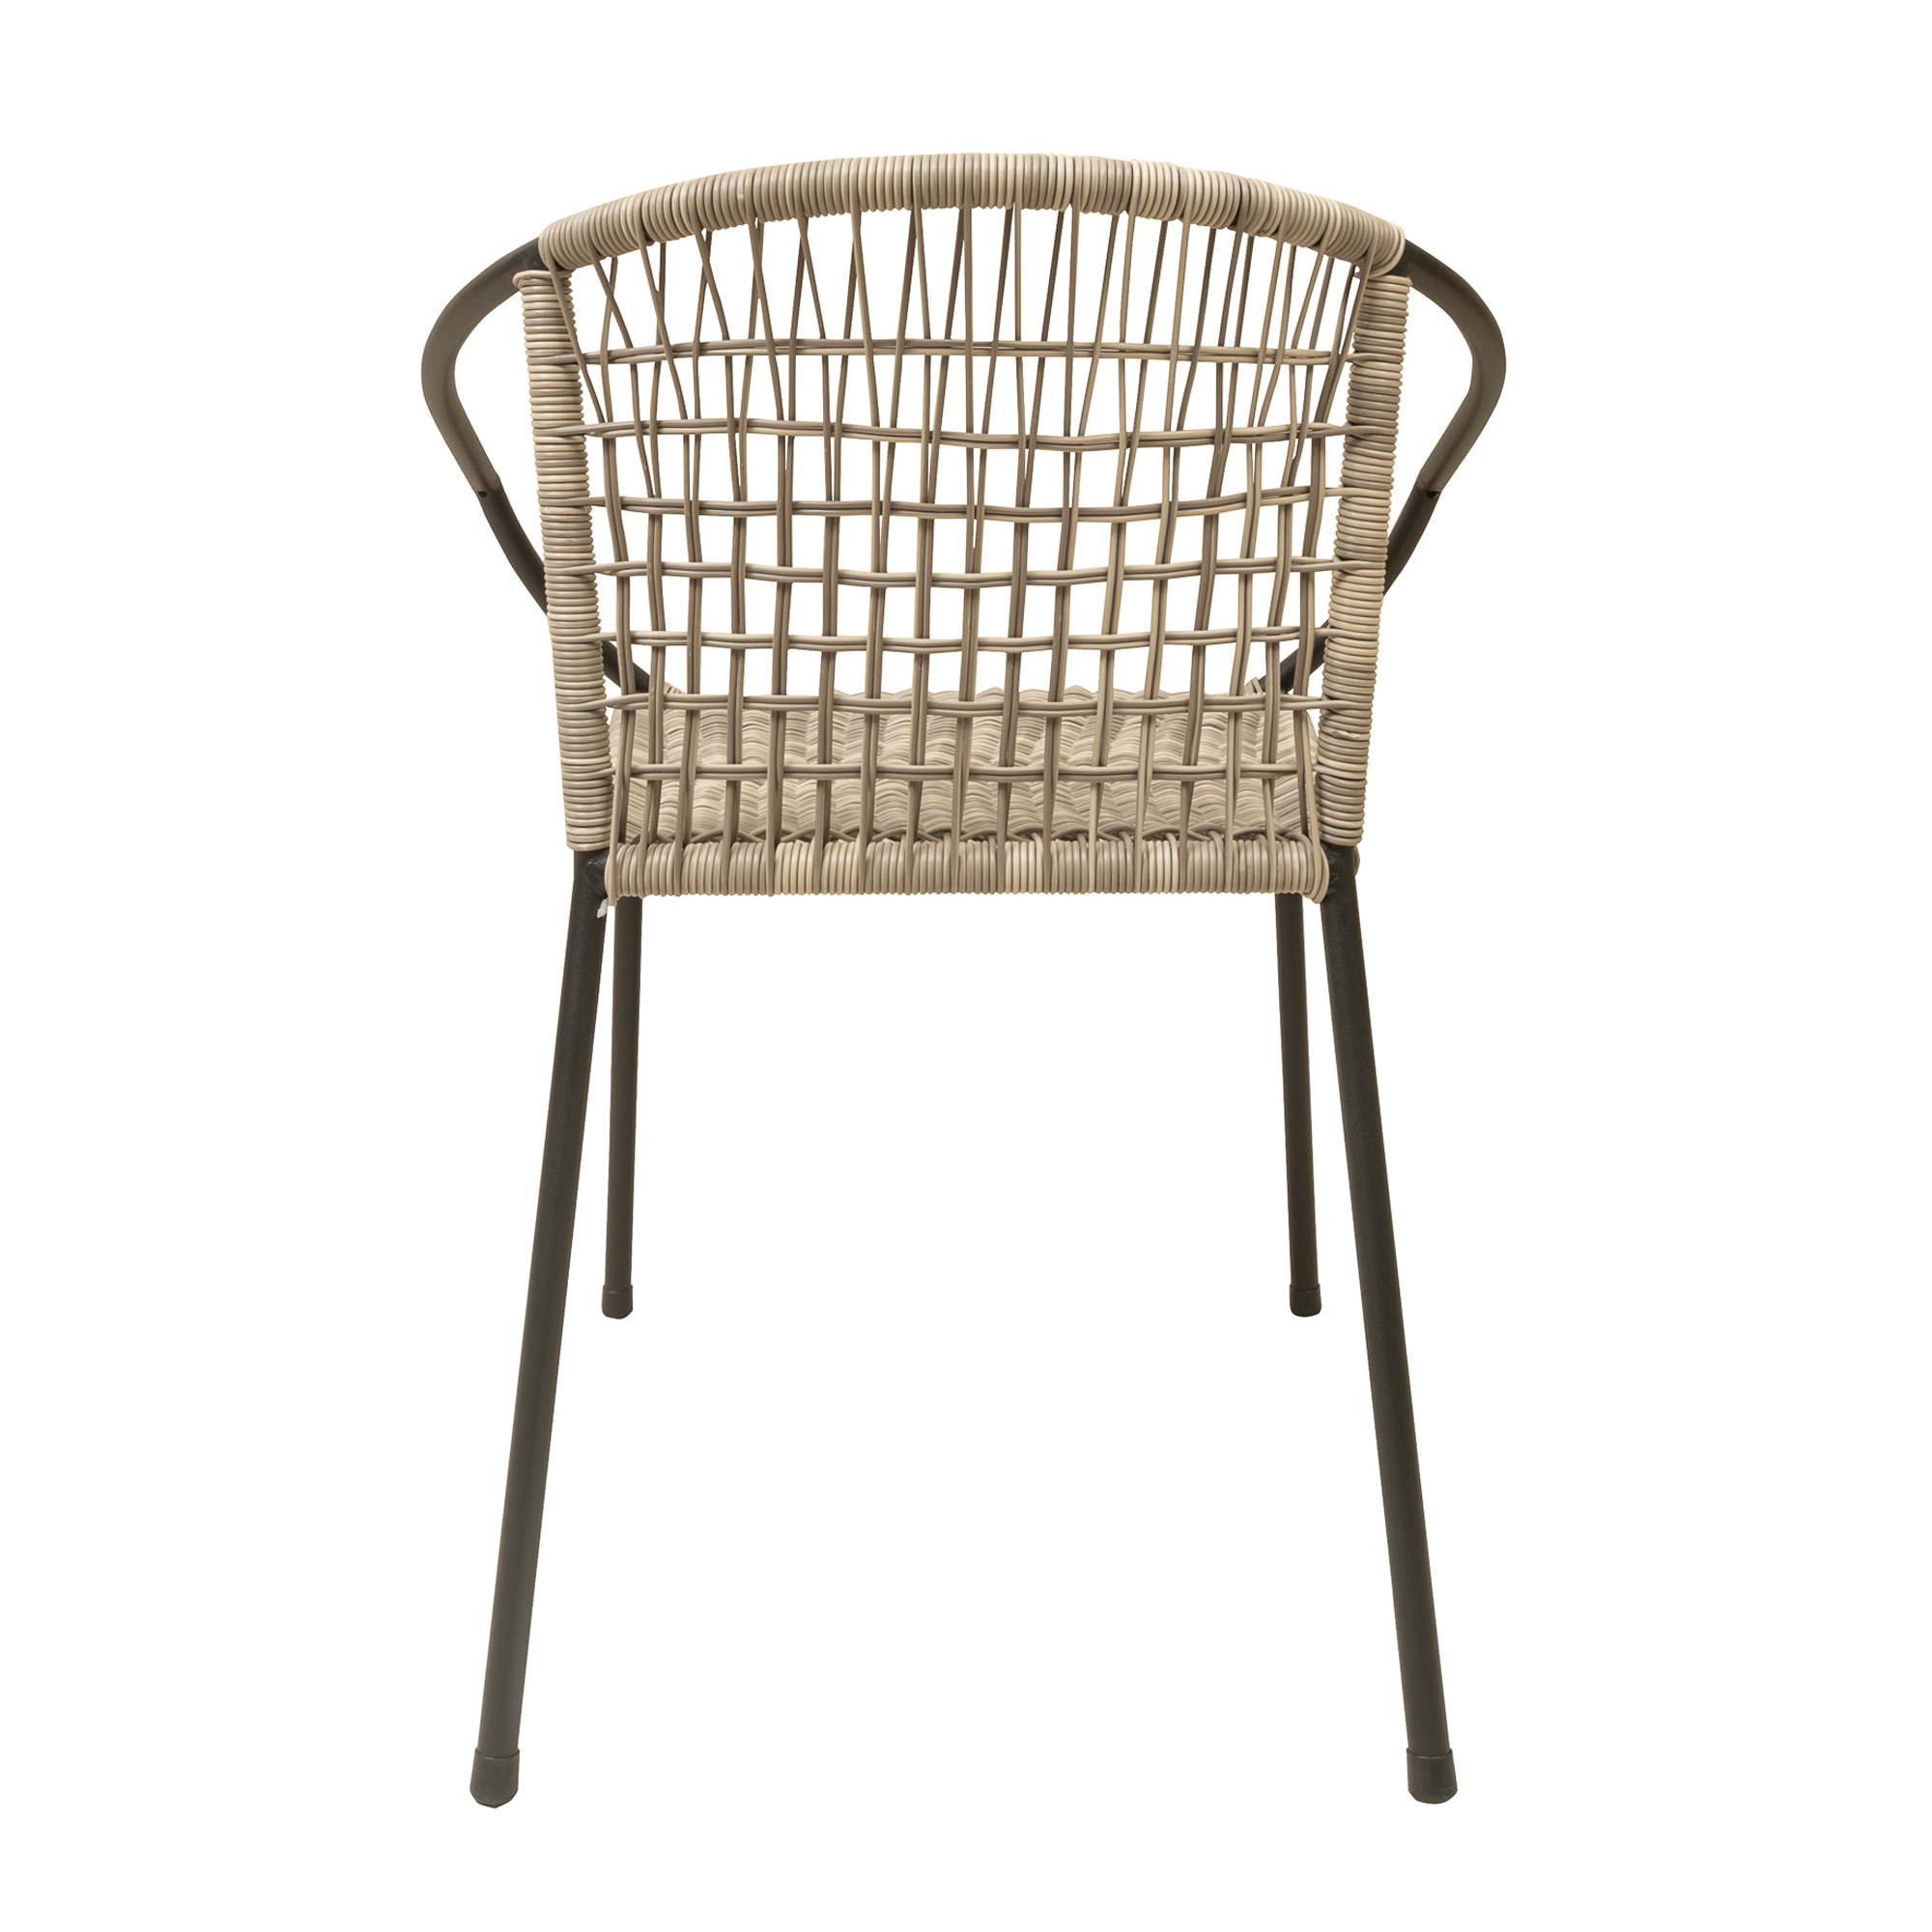 Zara Dining Chair | Alifurn - The Outdoor Furniture Company